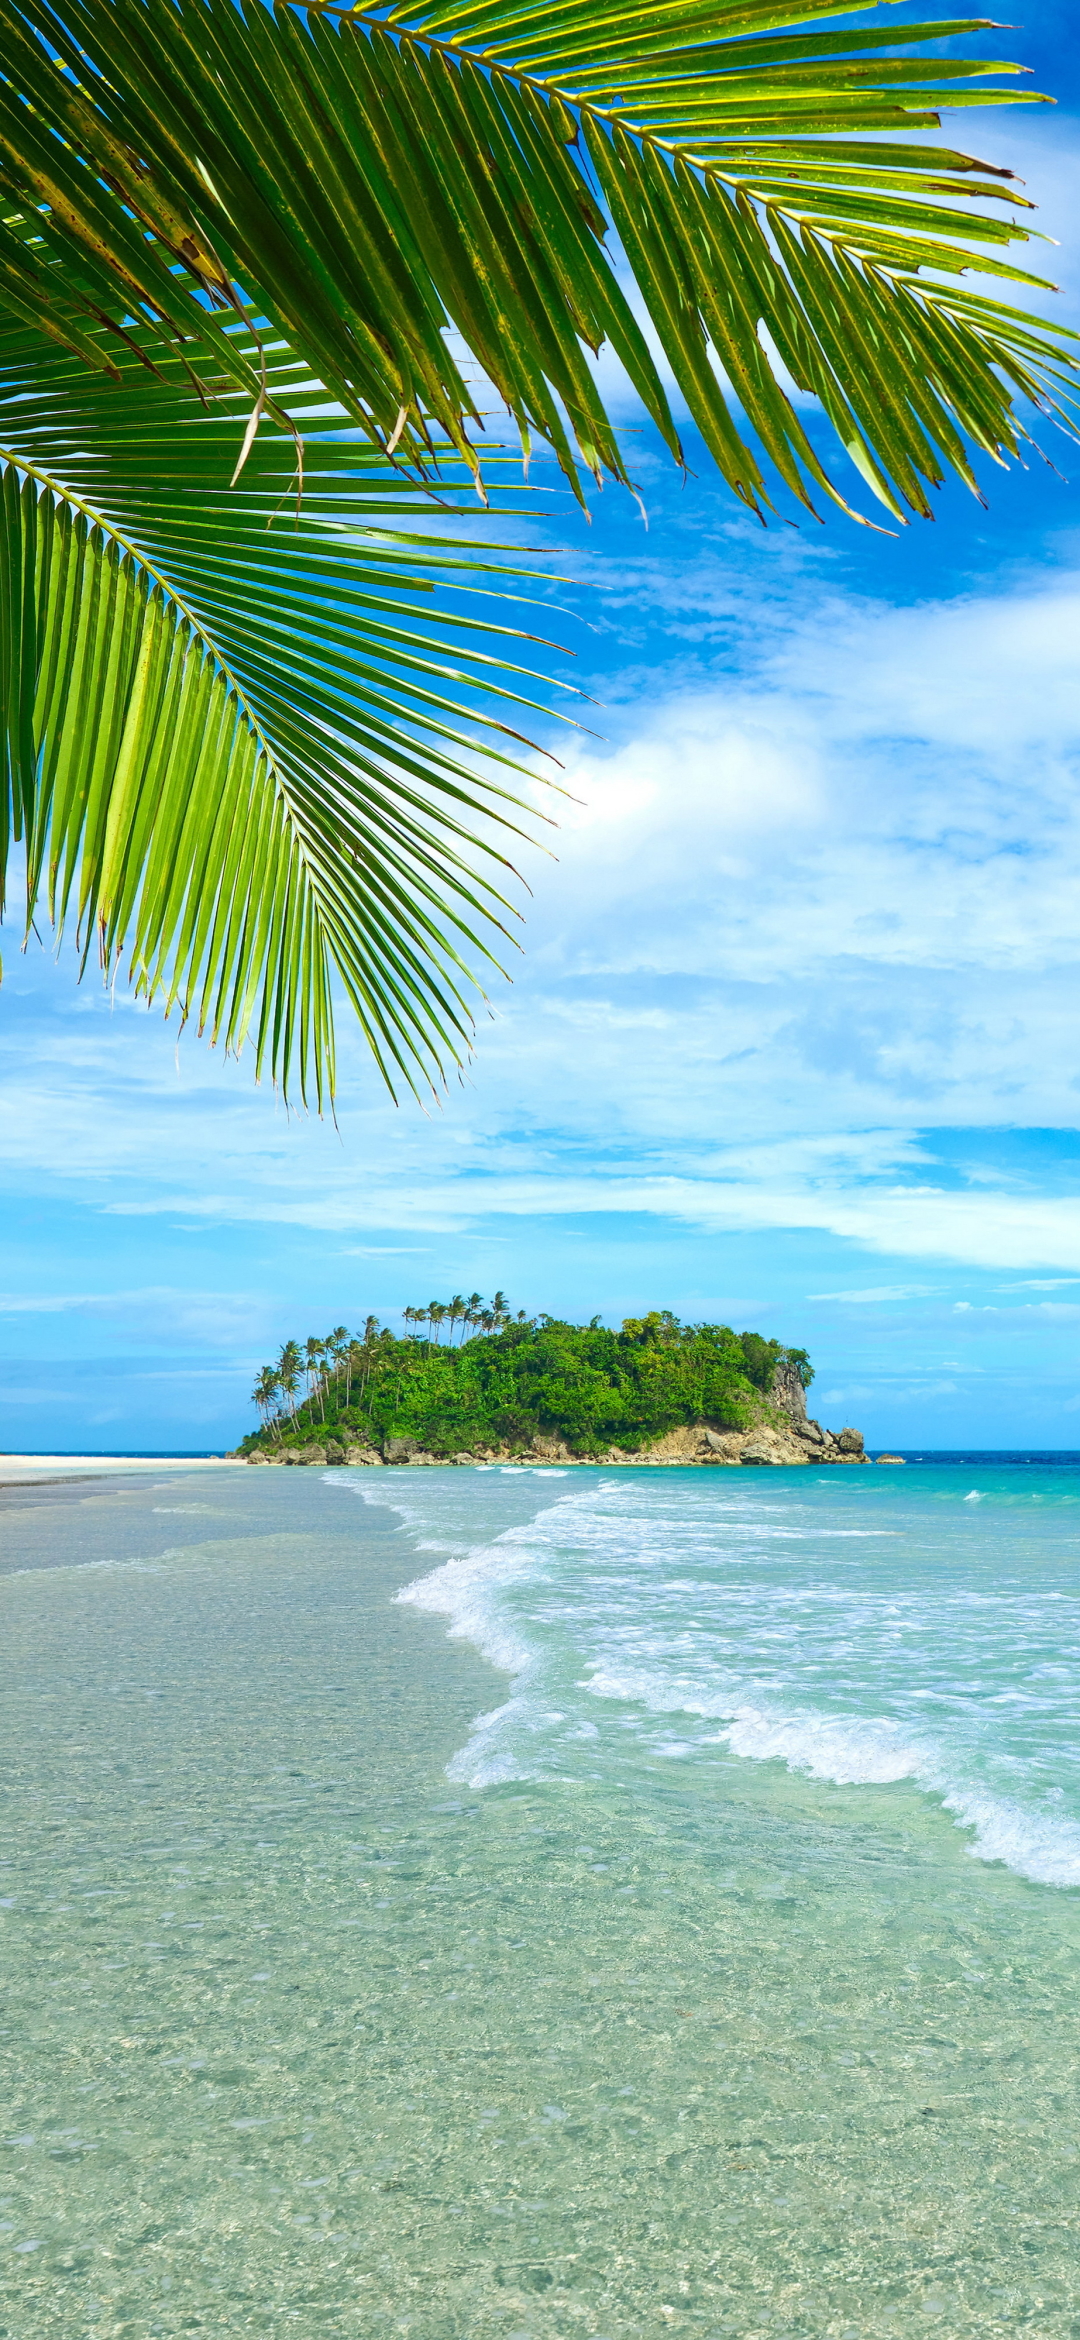 Descarga gratuita de fondo de pantalla para móvil de Mar, Playa, Océano, Tropical, Tierra/naturaleza, Tropico.